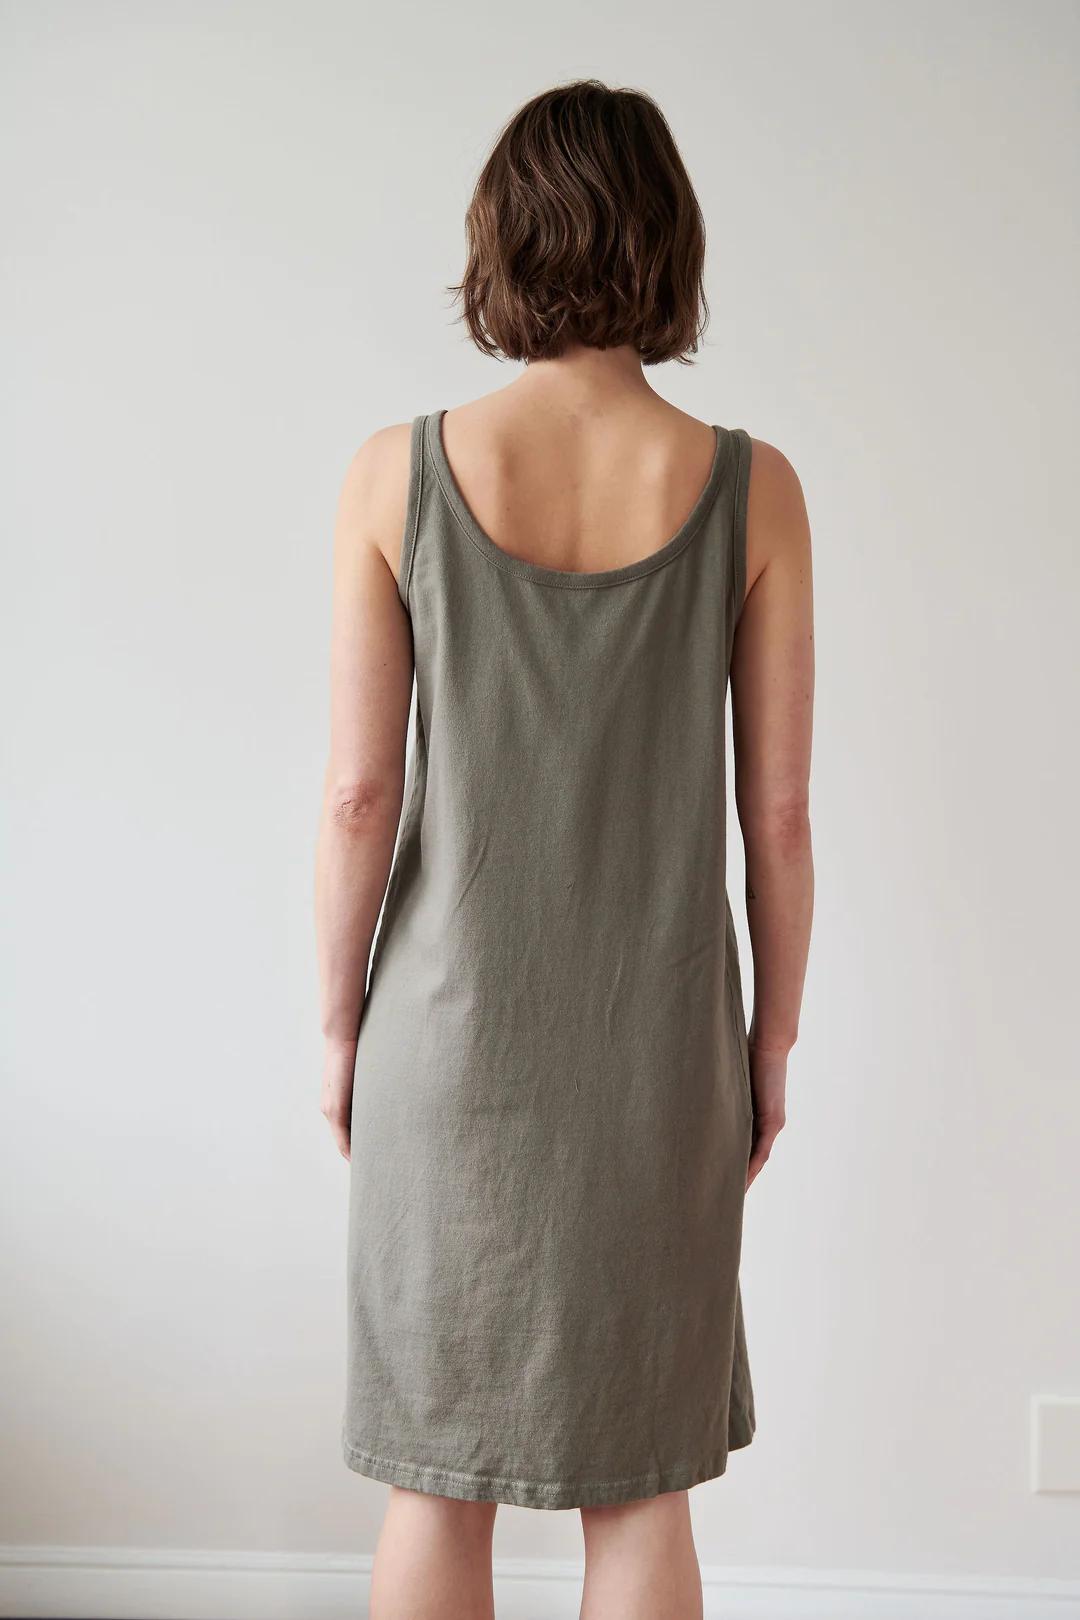 Product Image for Boatneck Dress, Fir